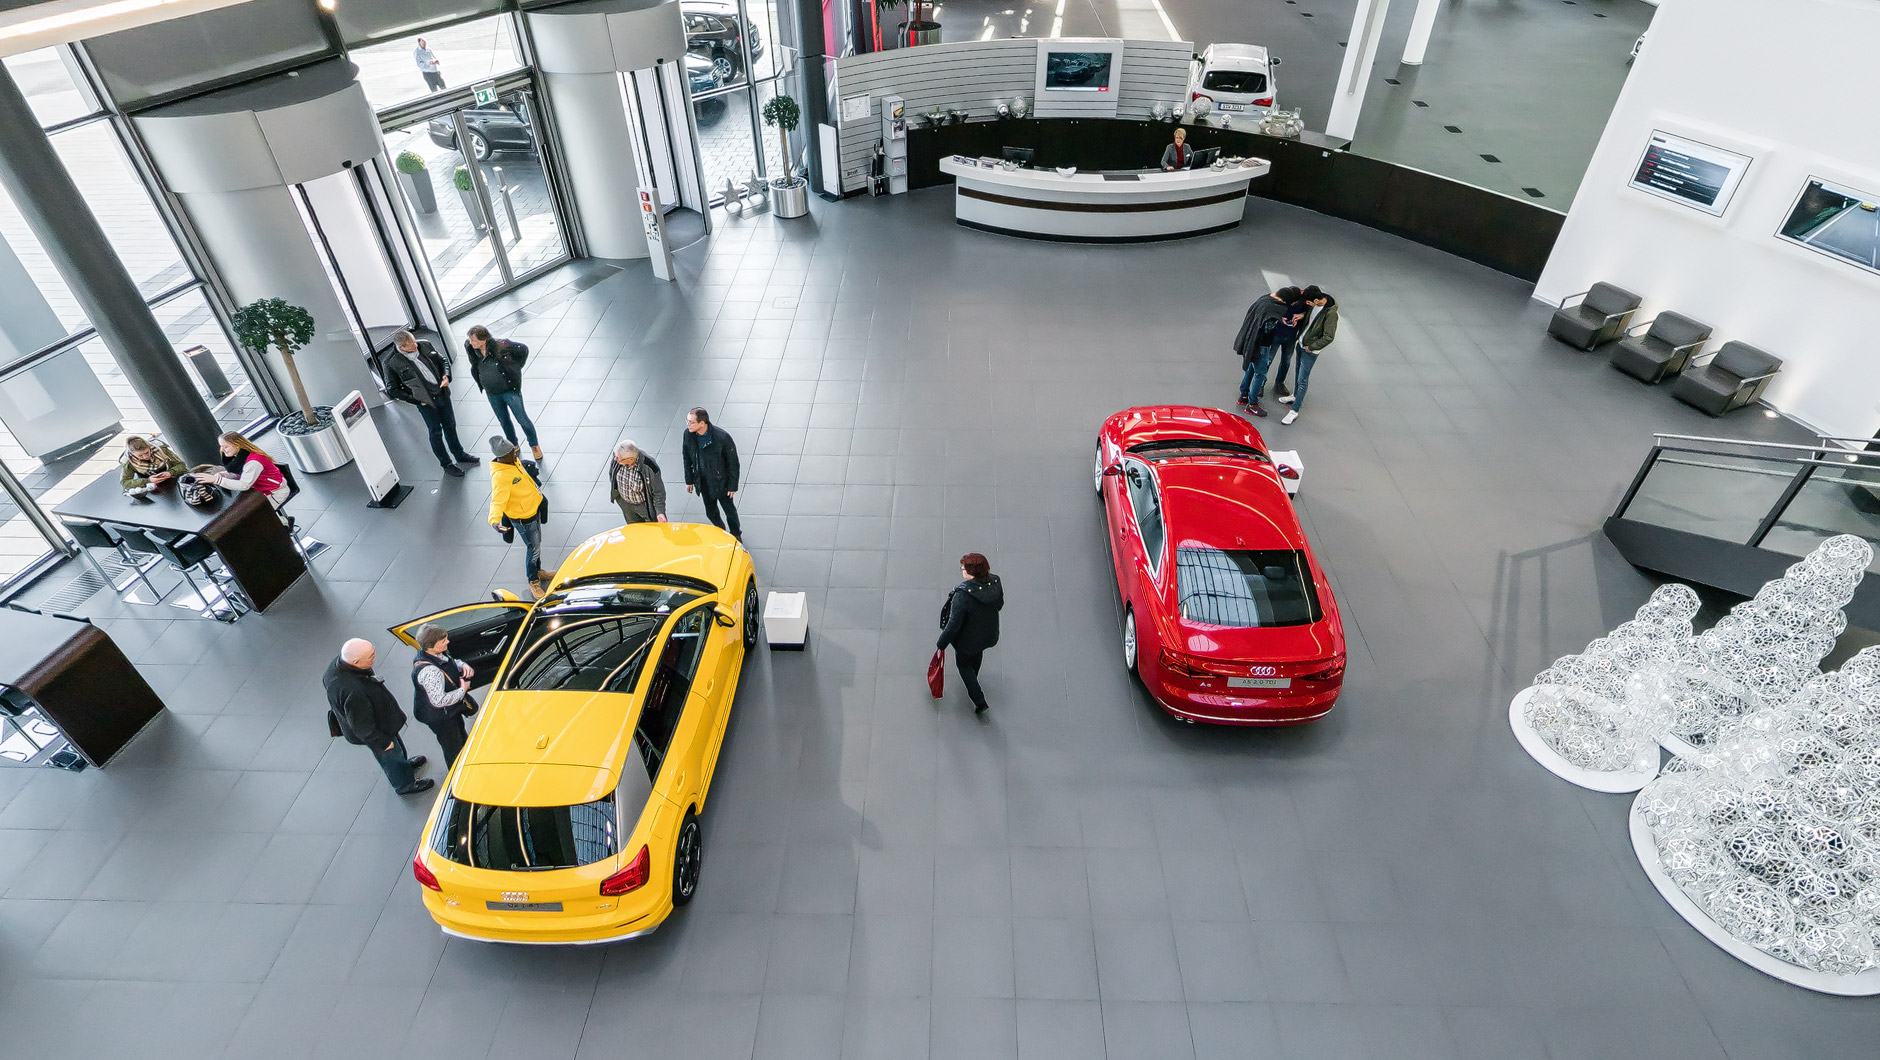 Fahrzeug-Ausstellung im Erdgeschoss des Audi Forum Neckarsulm. Verschiedene aktuelle Modelle.